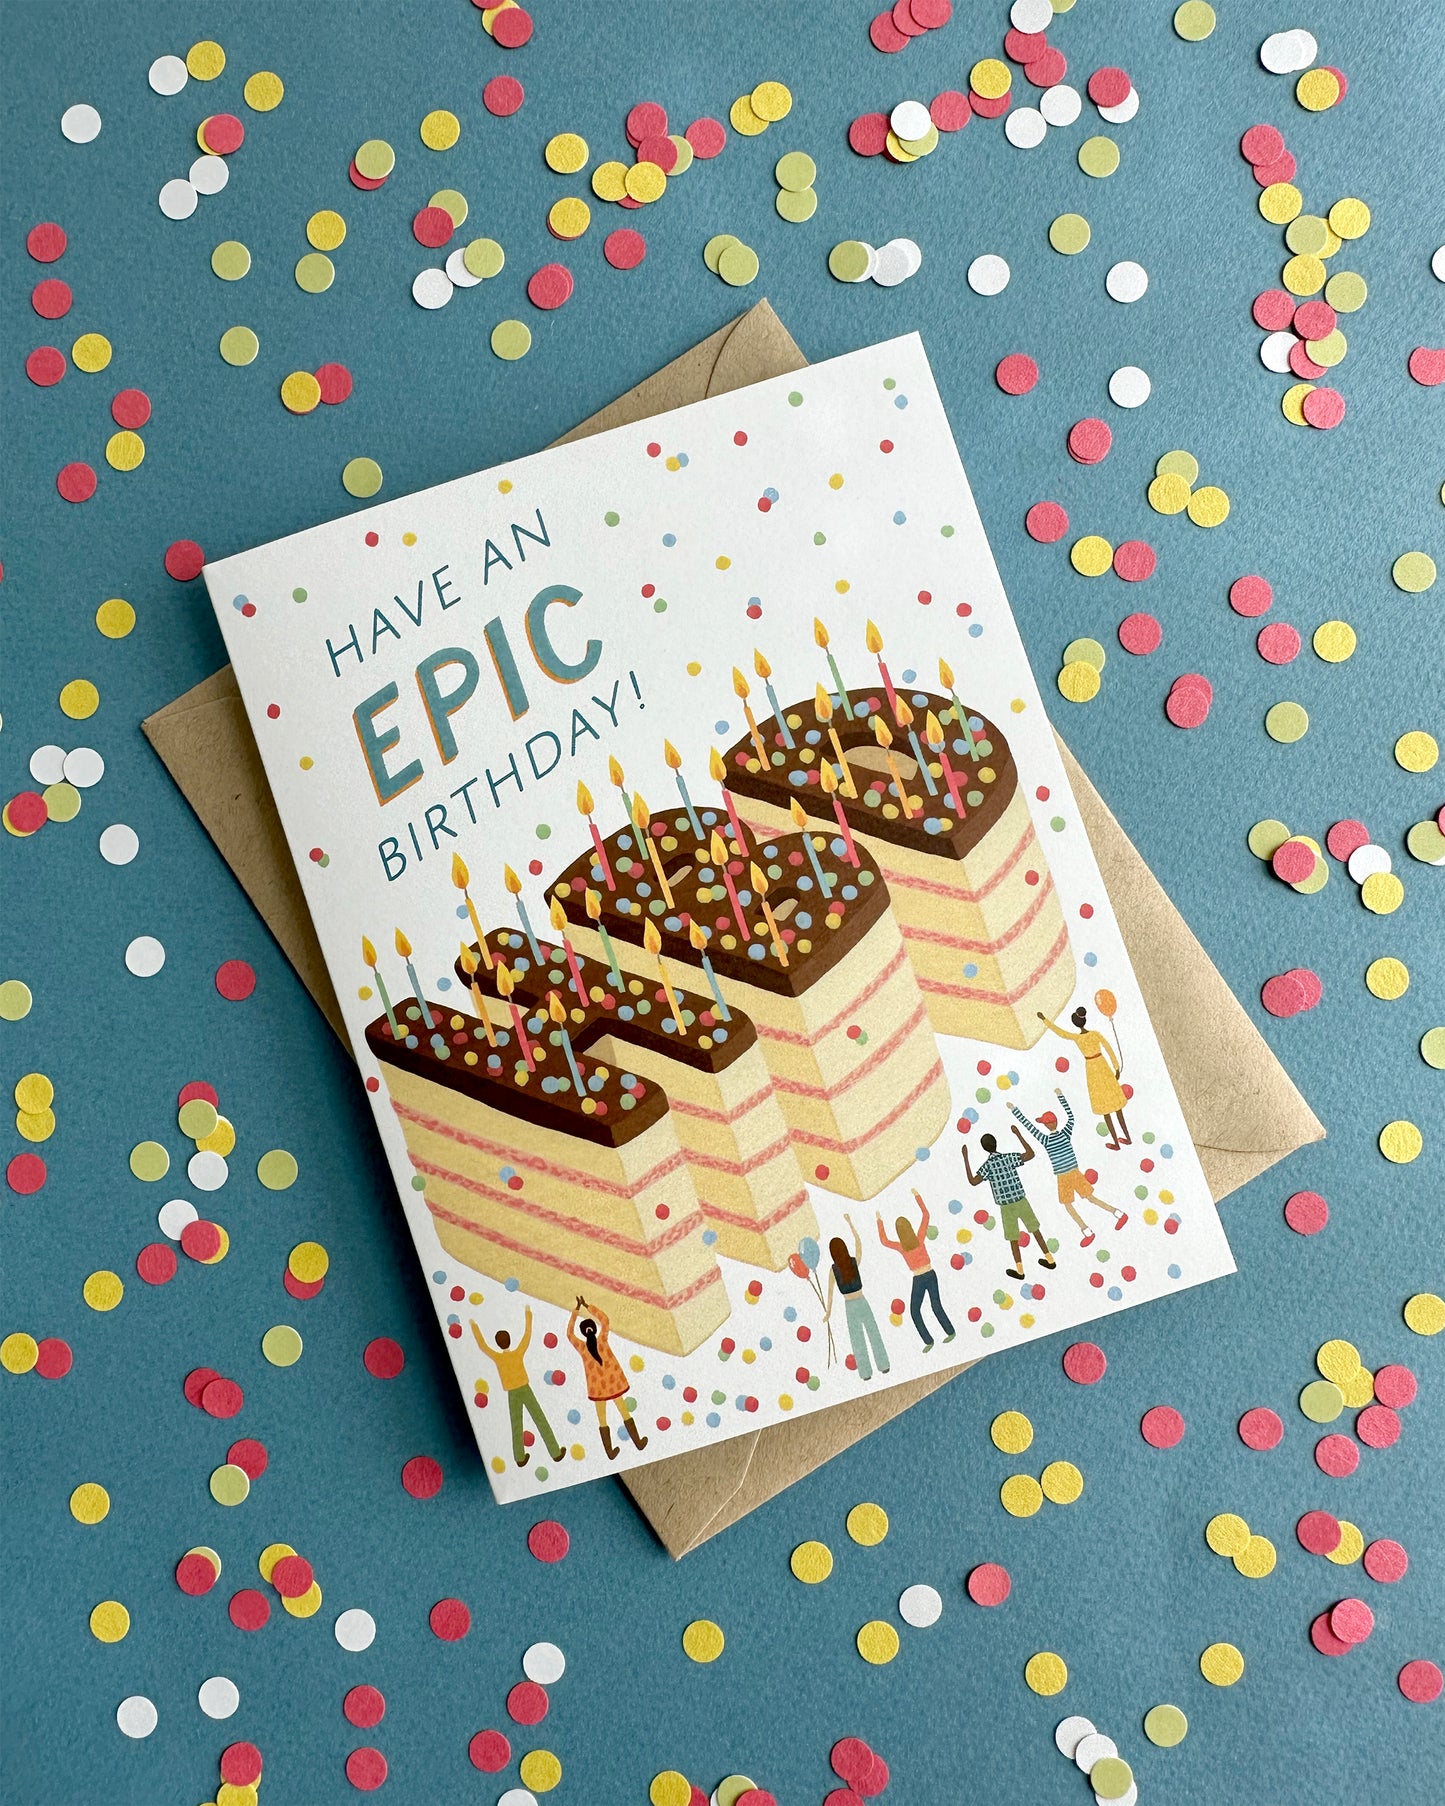 EPIC CAKE - BIRTHDAY GREETING CARD